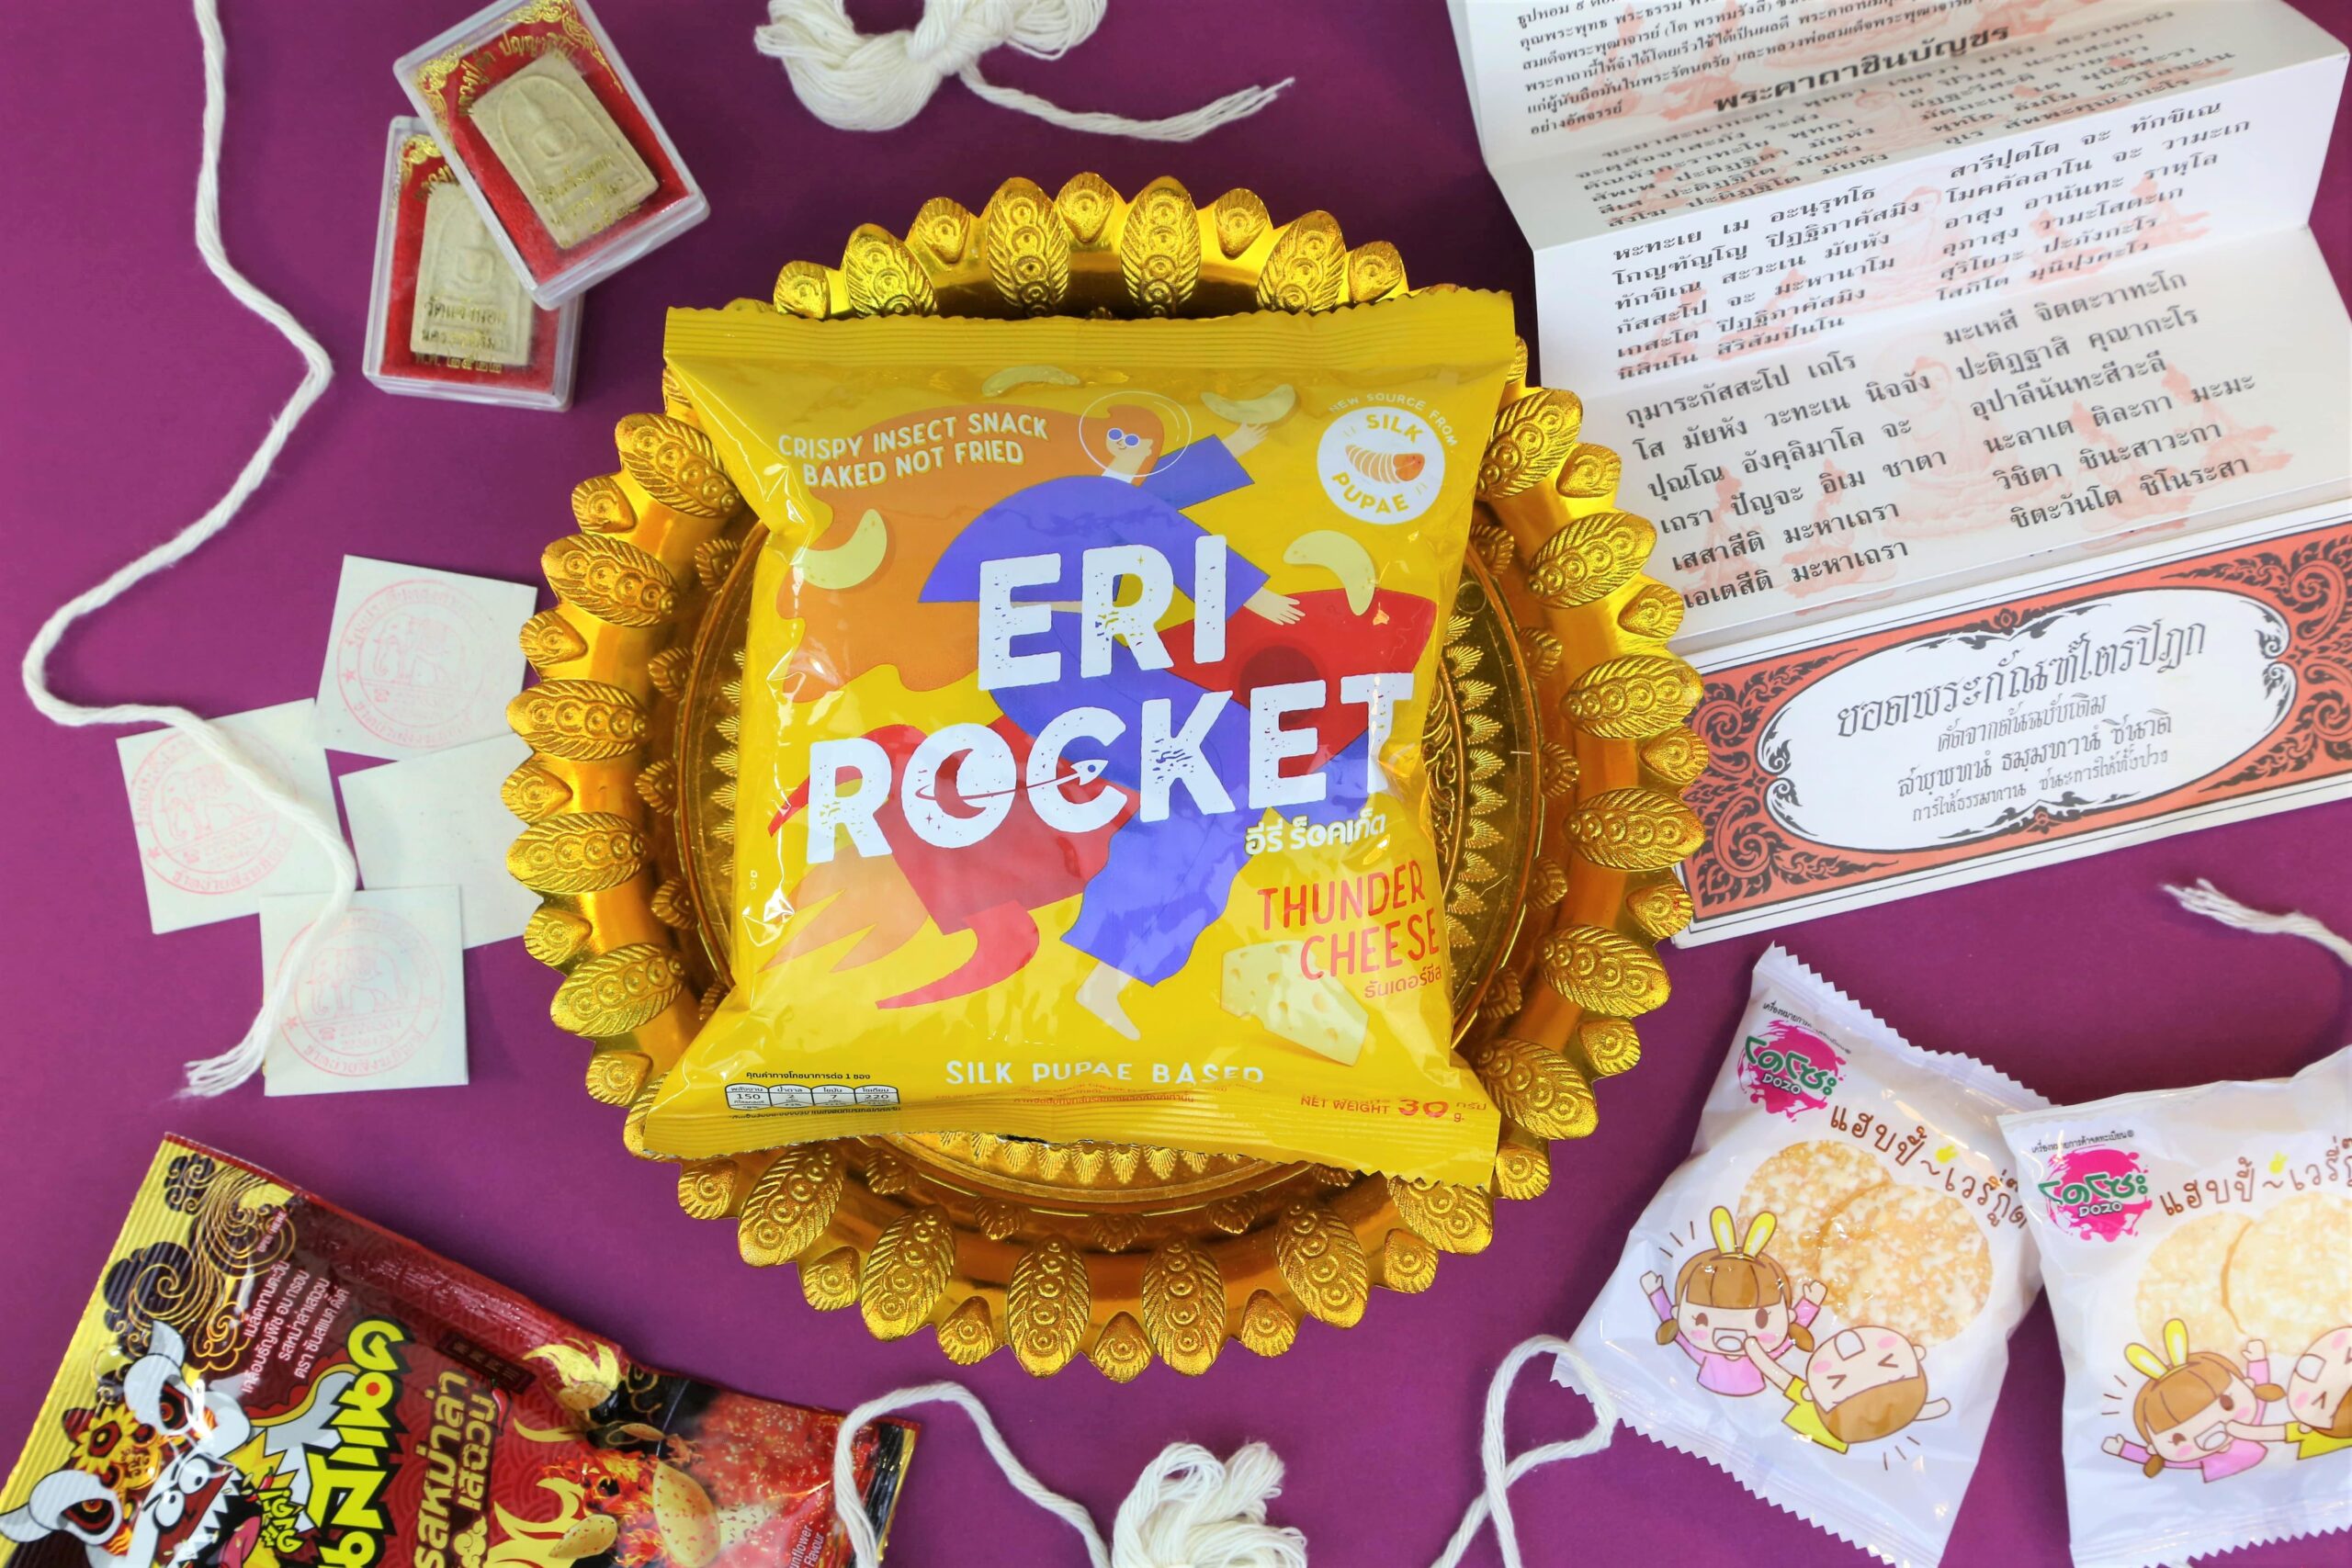 Unique Thai snack Eri rocket made from silk pupae